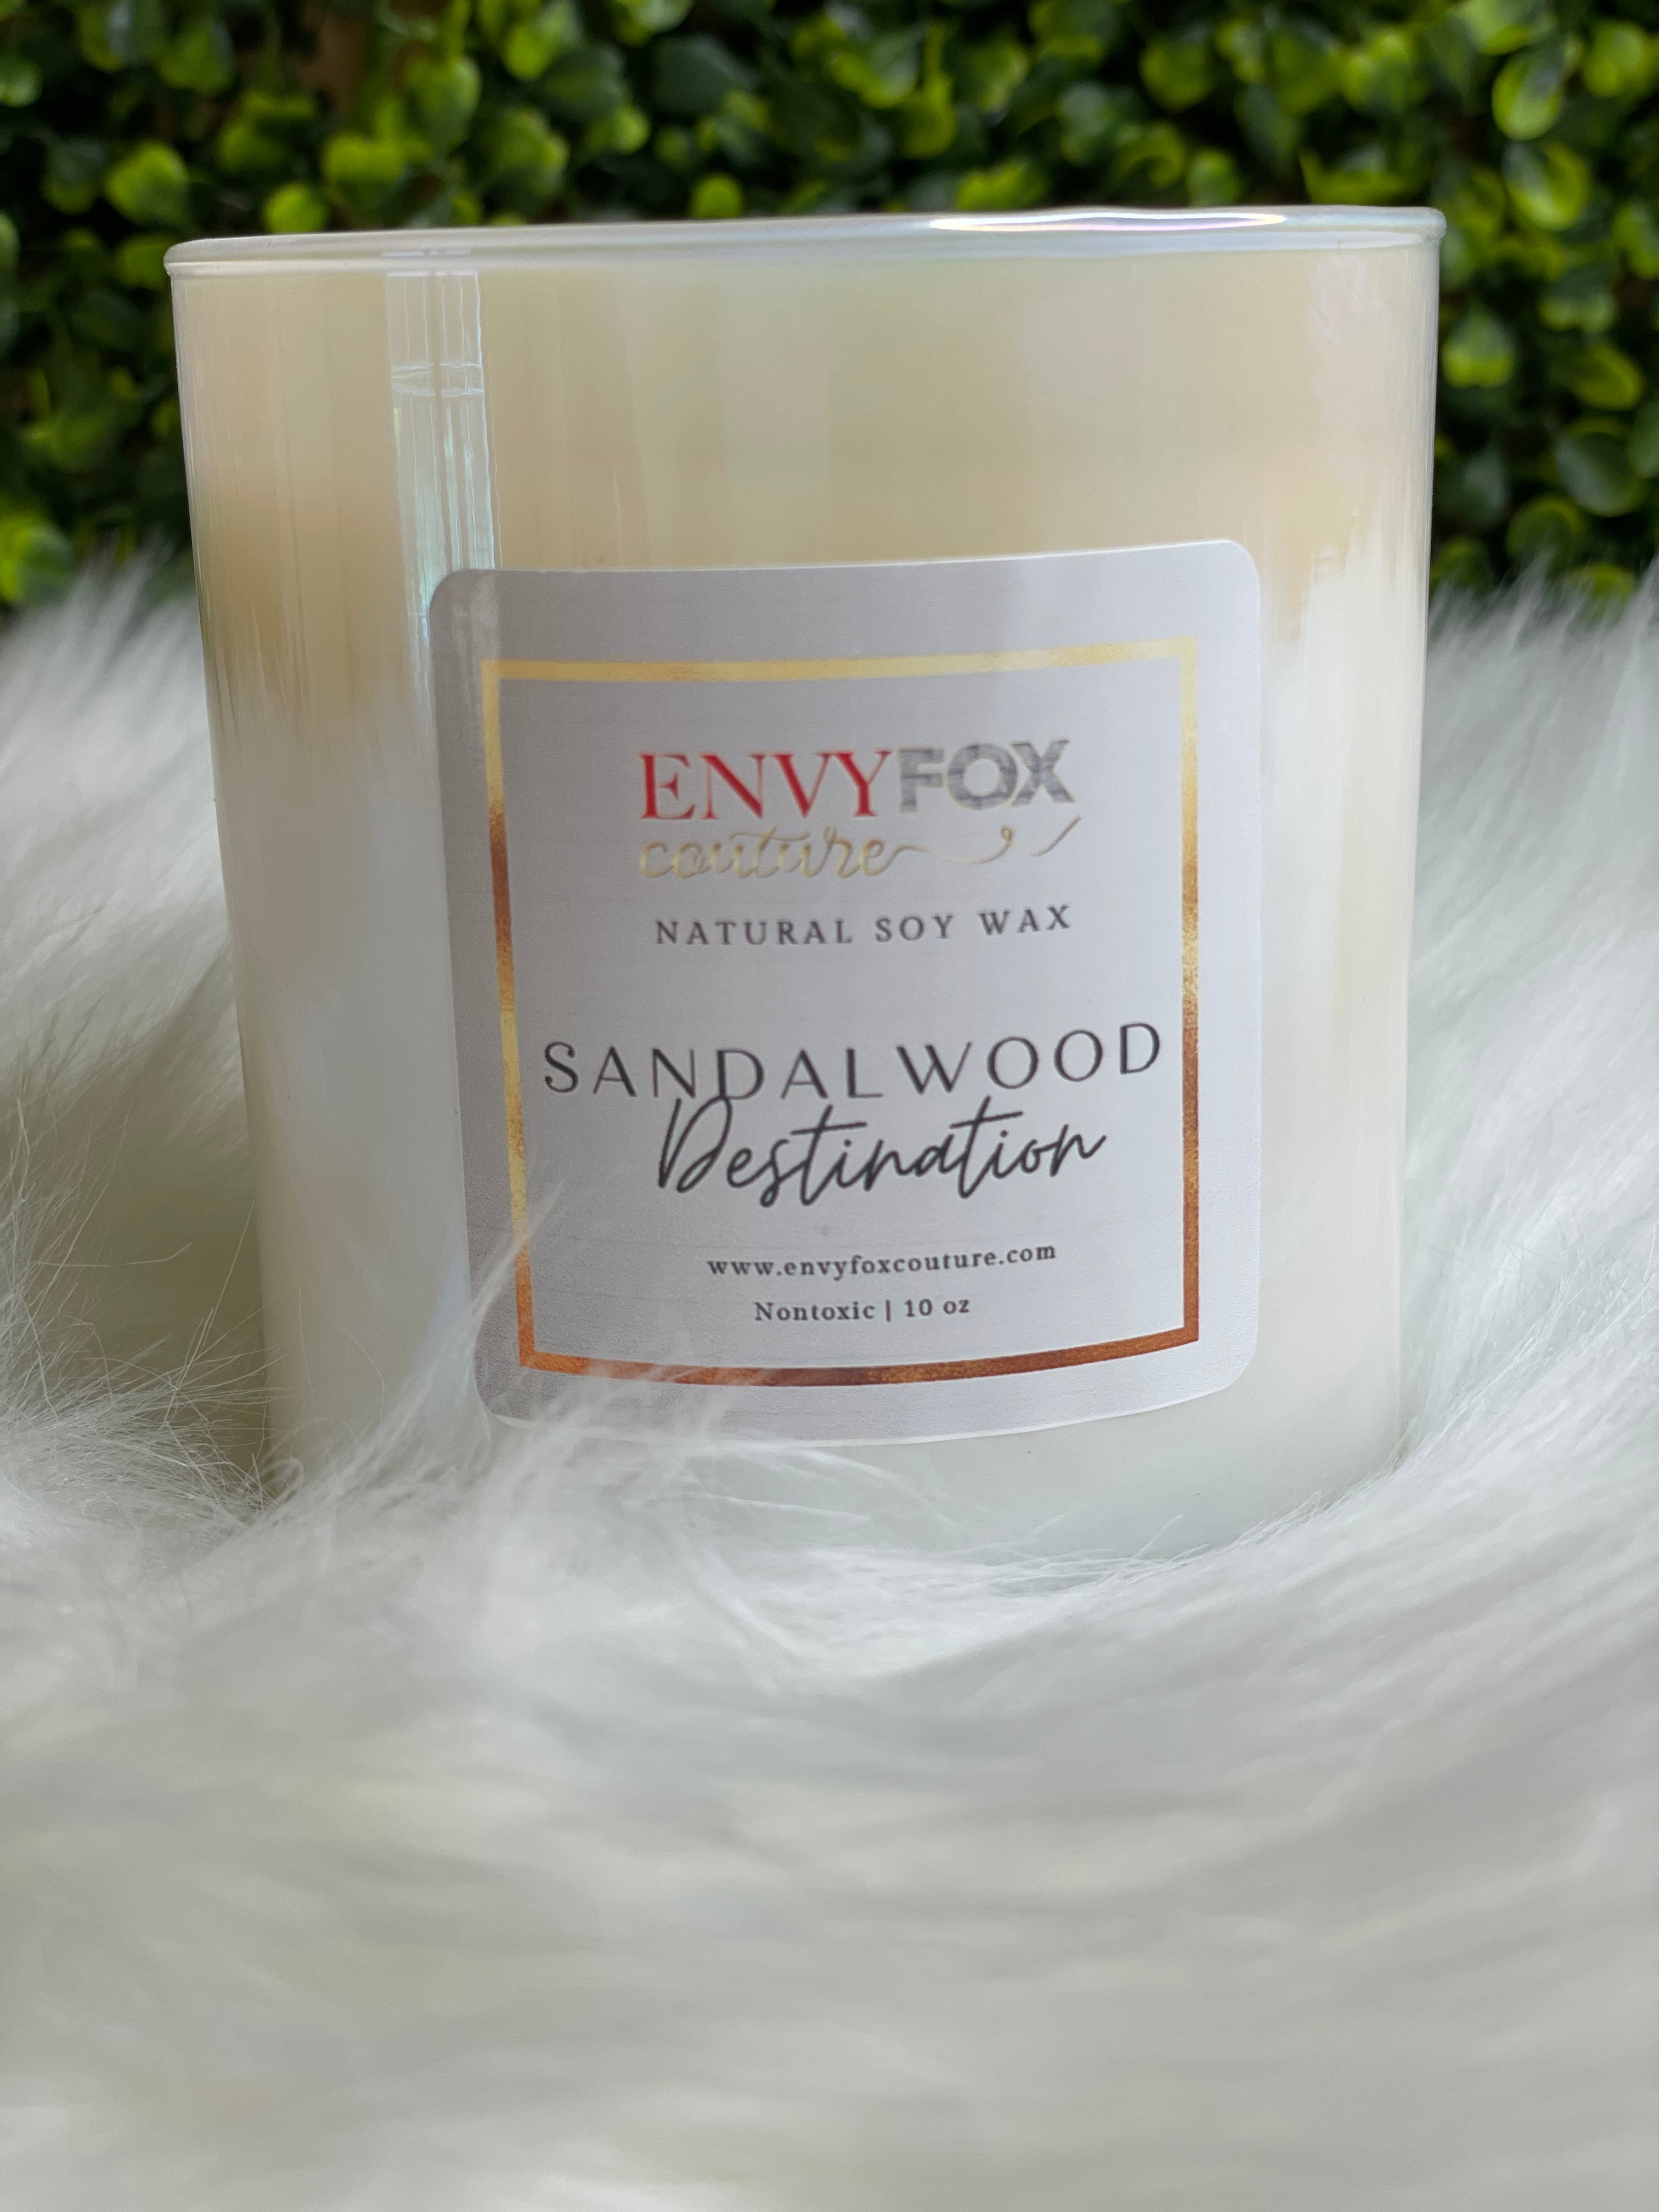 Sandalwood Destination 10 oz Natural Soy Wax Candle